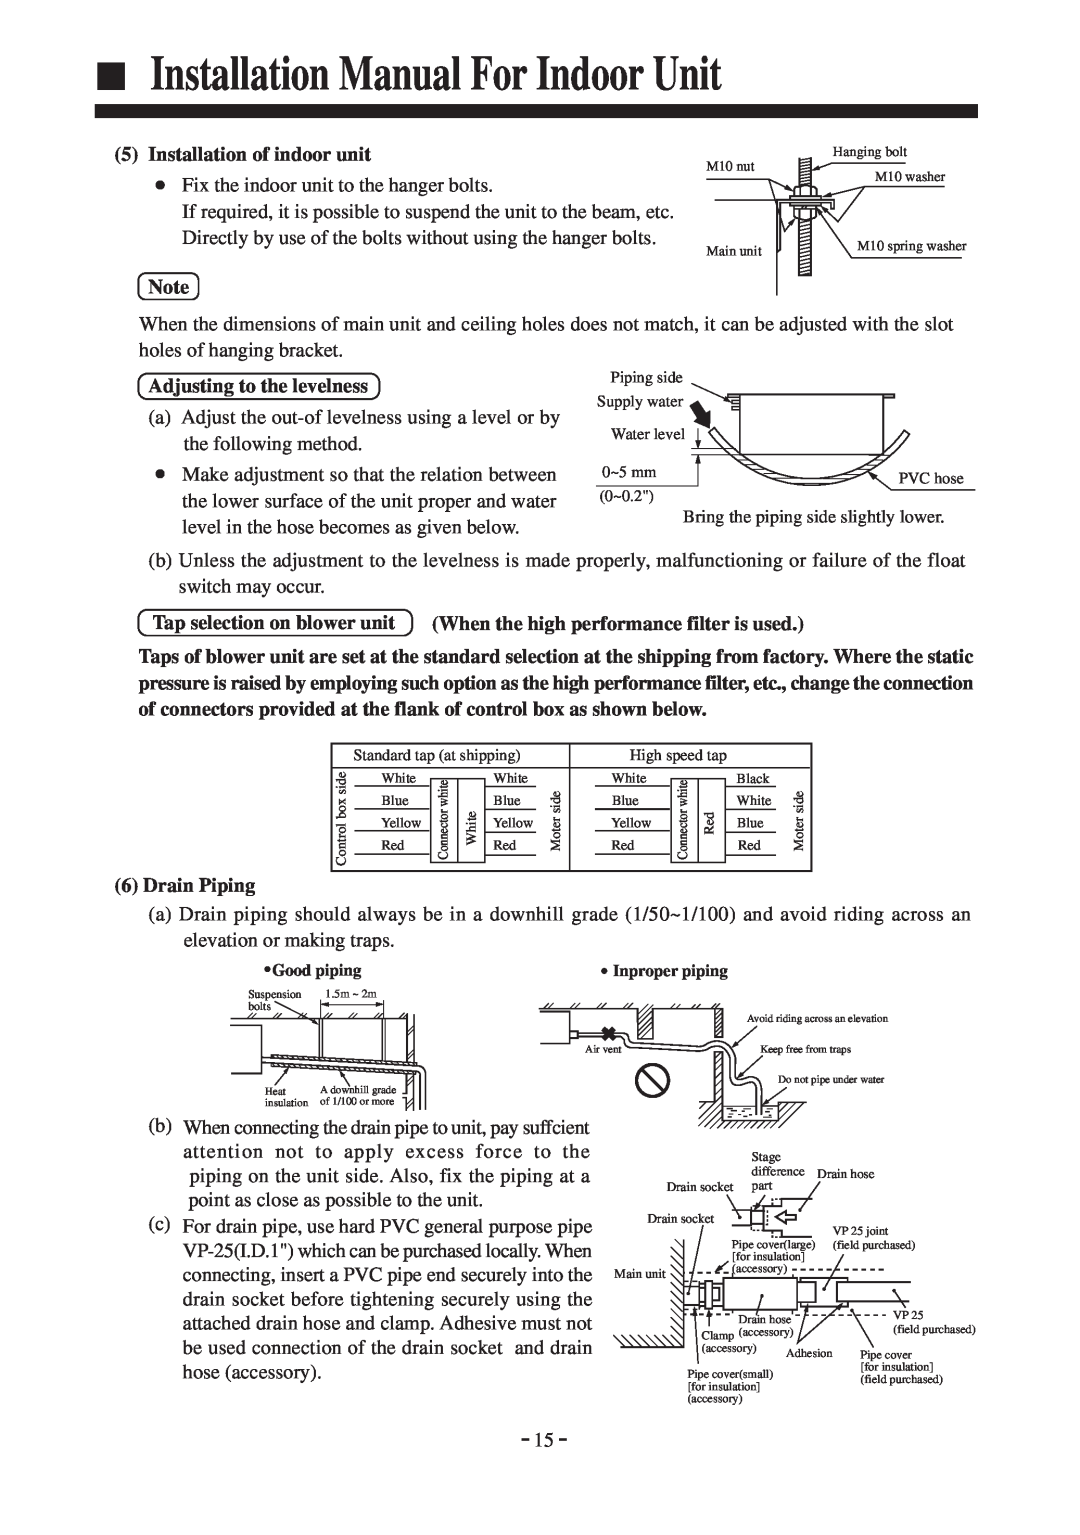 Haier AD36NAMBEA(ECO) Installation Manual For Indoor Unit, Installation of indoor unit, Adjusting to the levelness 